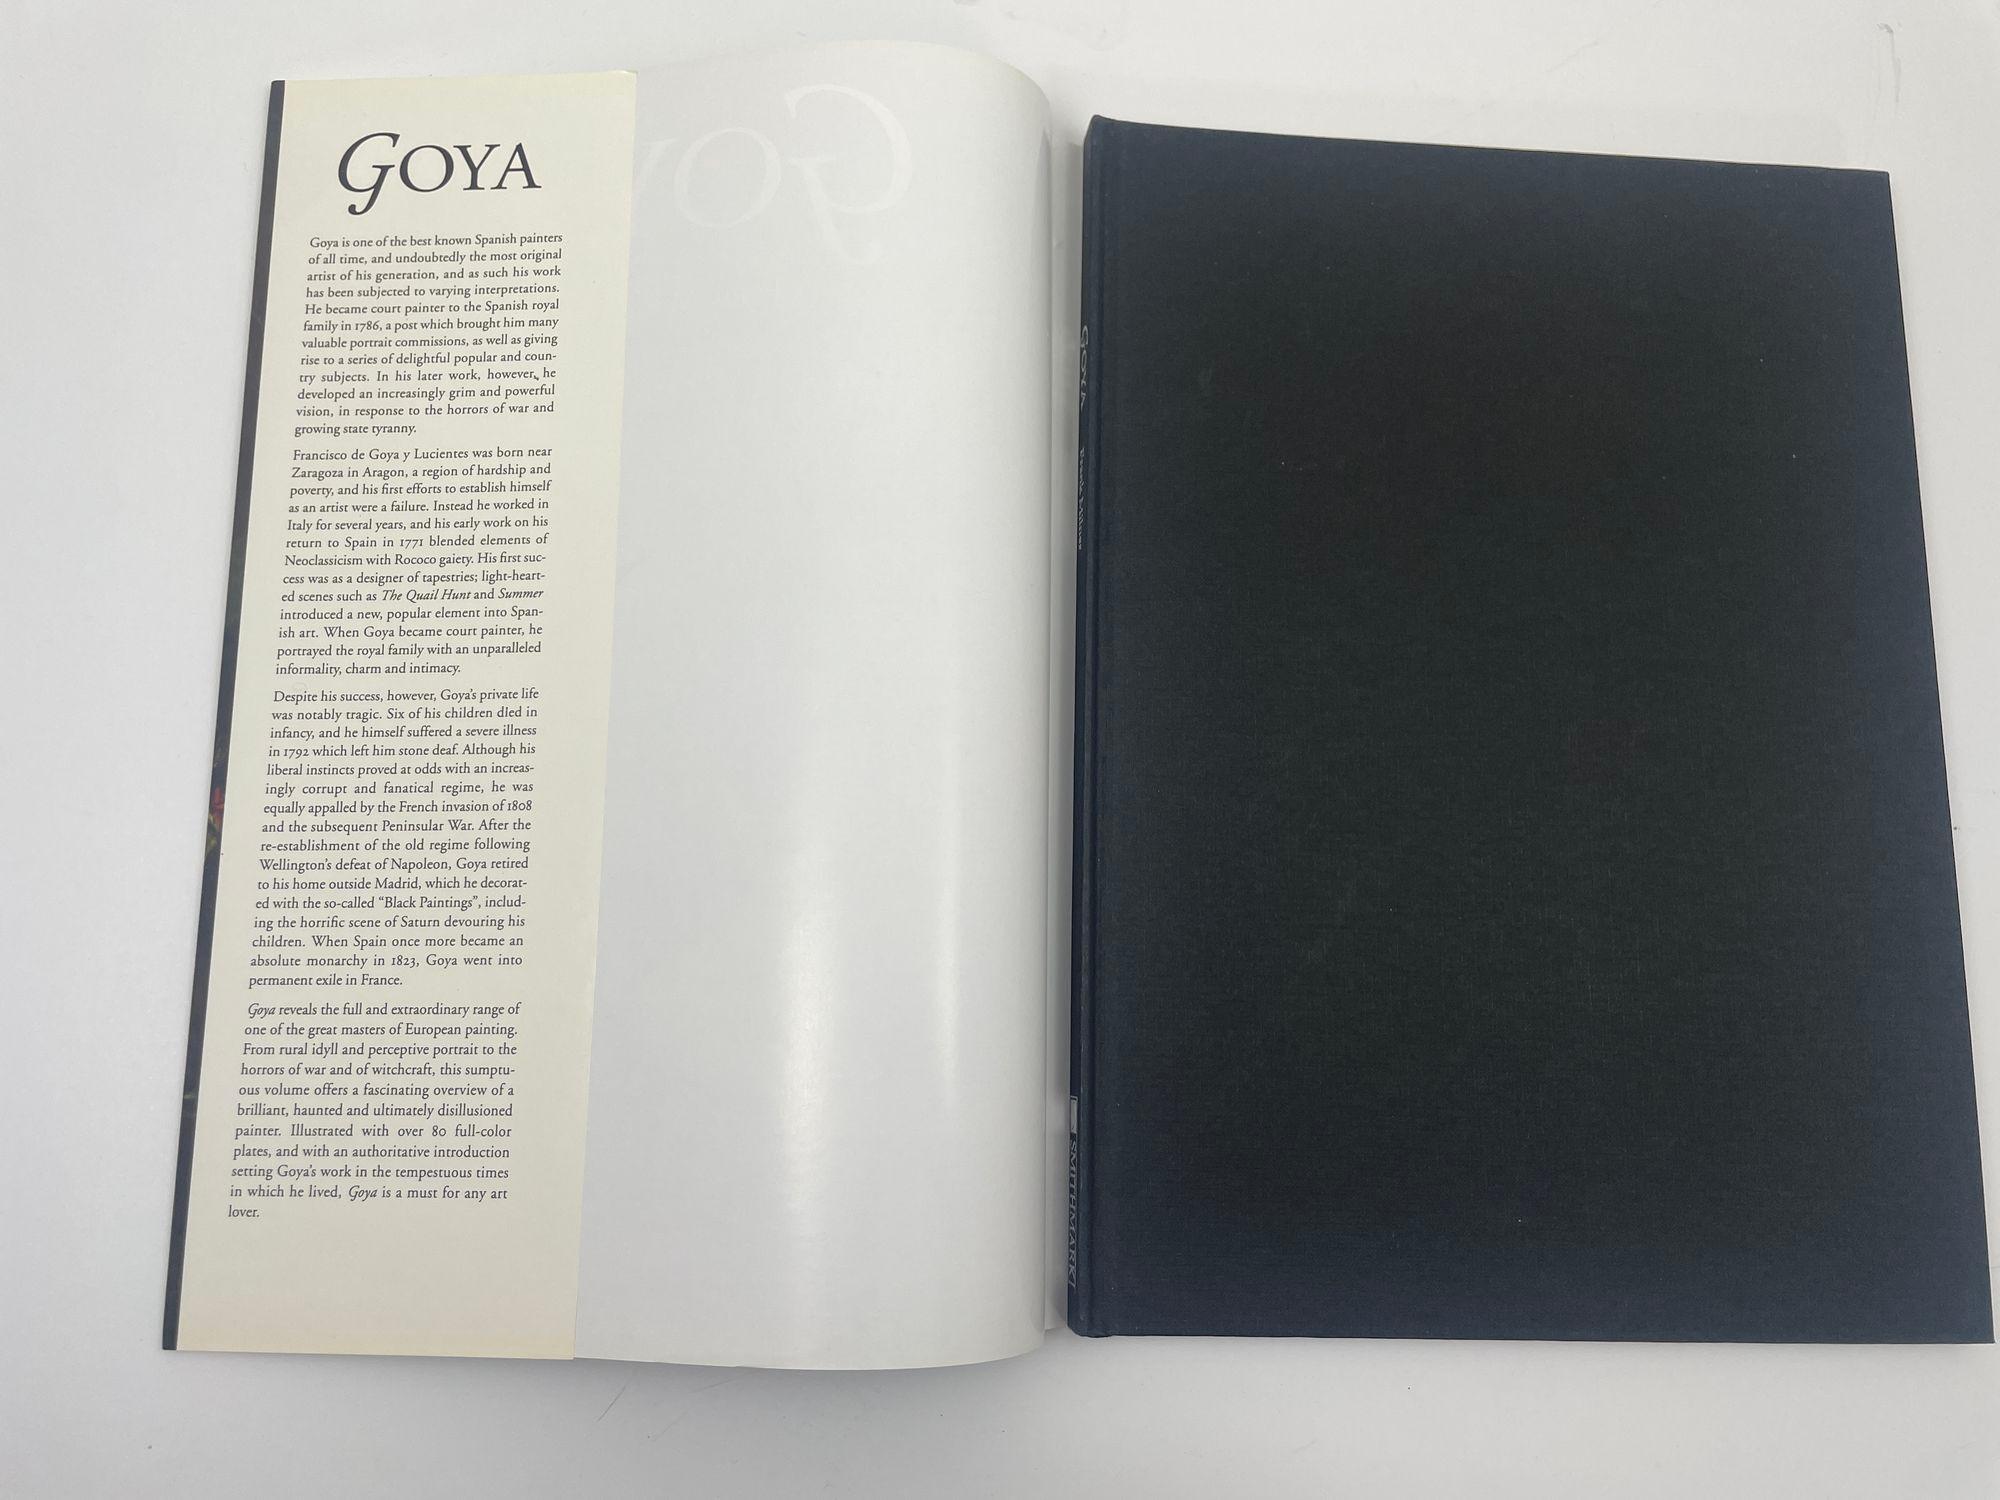 Spanish Goya Hardcover Book by Frank Milner 1st Ed. 1995